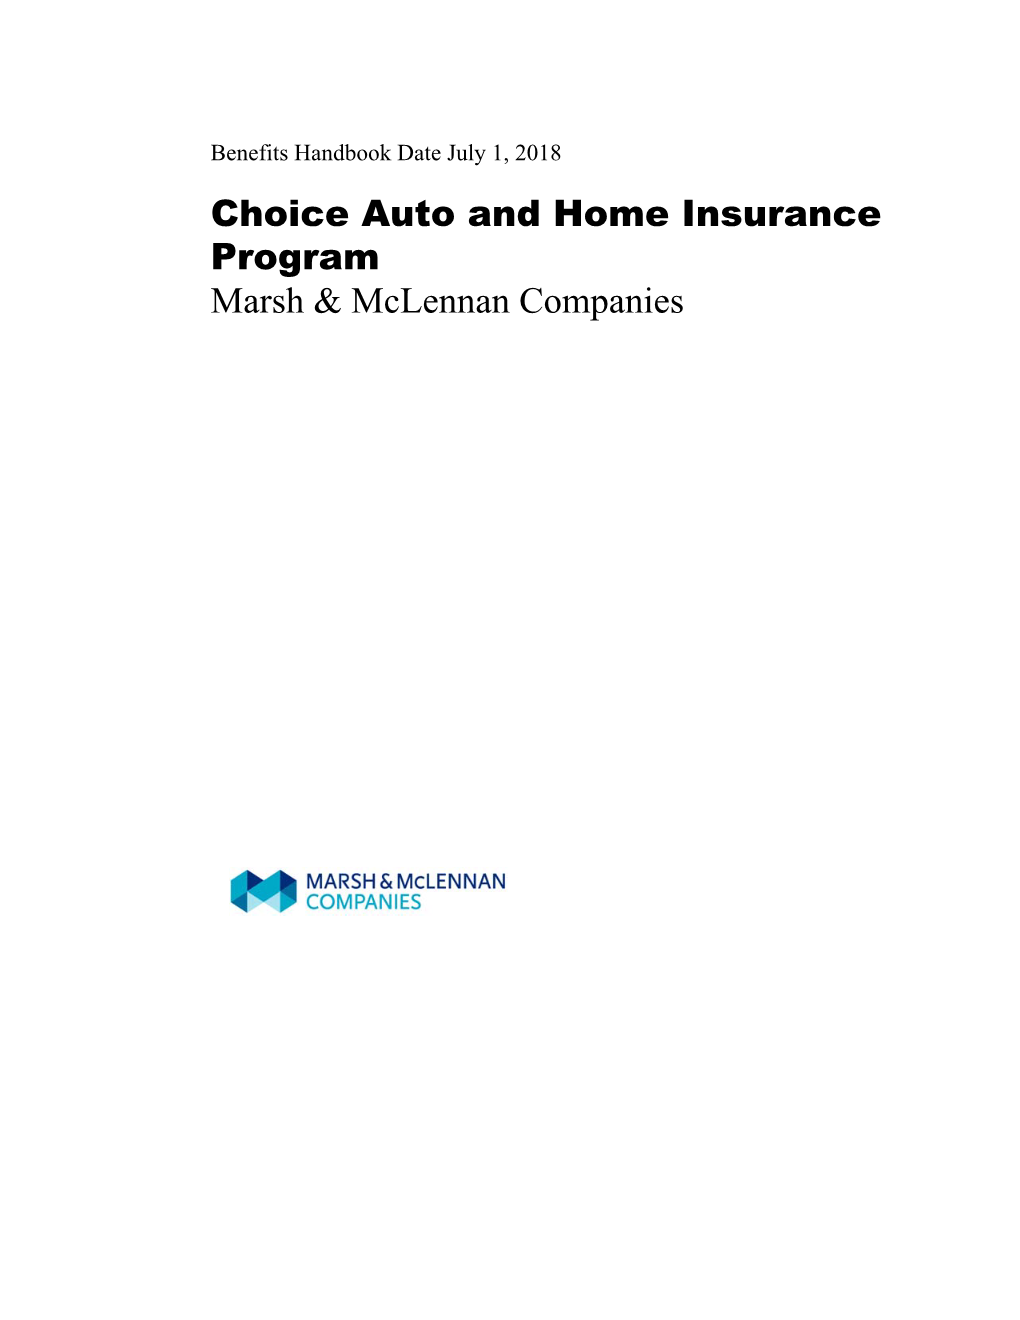 Choice Auto and Home Insurance Program Marsh & Mclennan